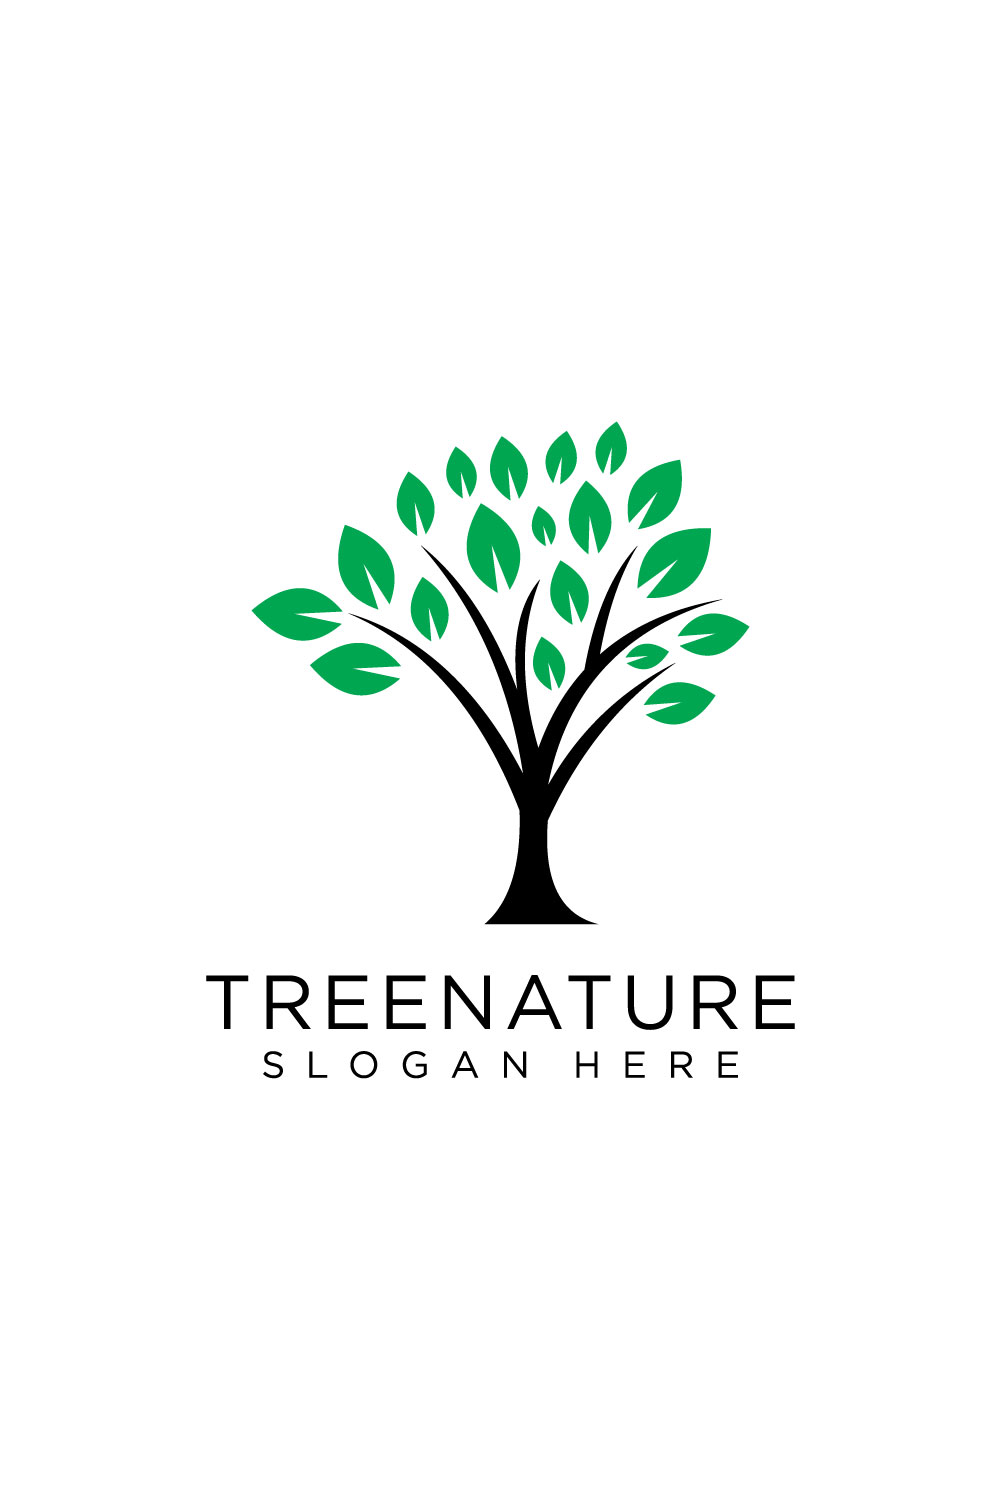 tree nature logo design vector pinterest preview image.